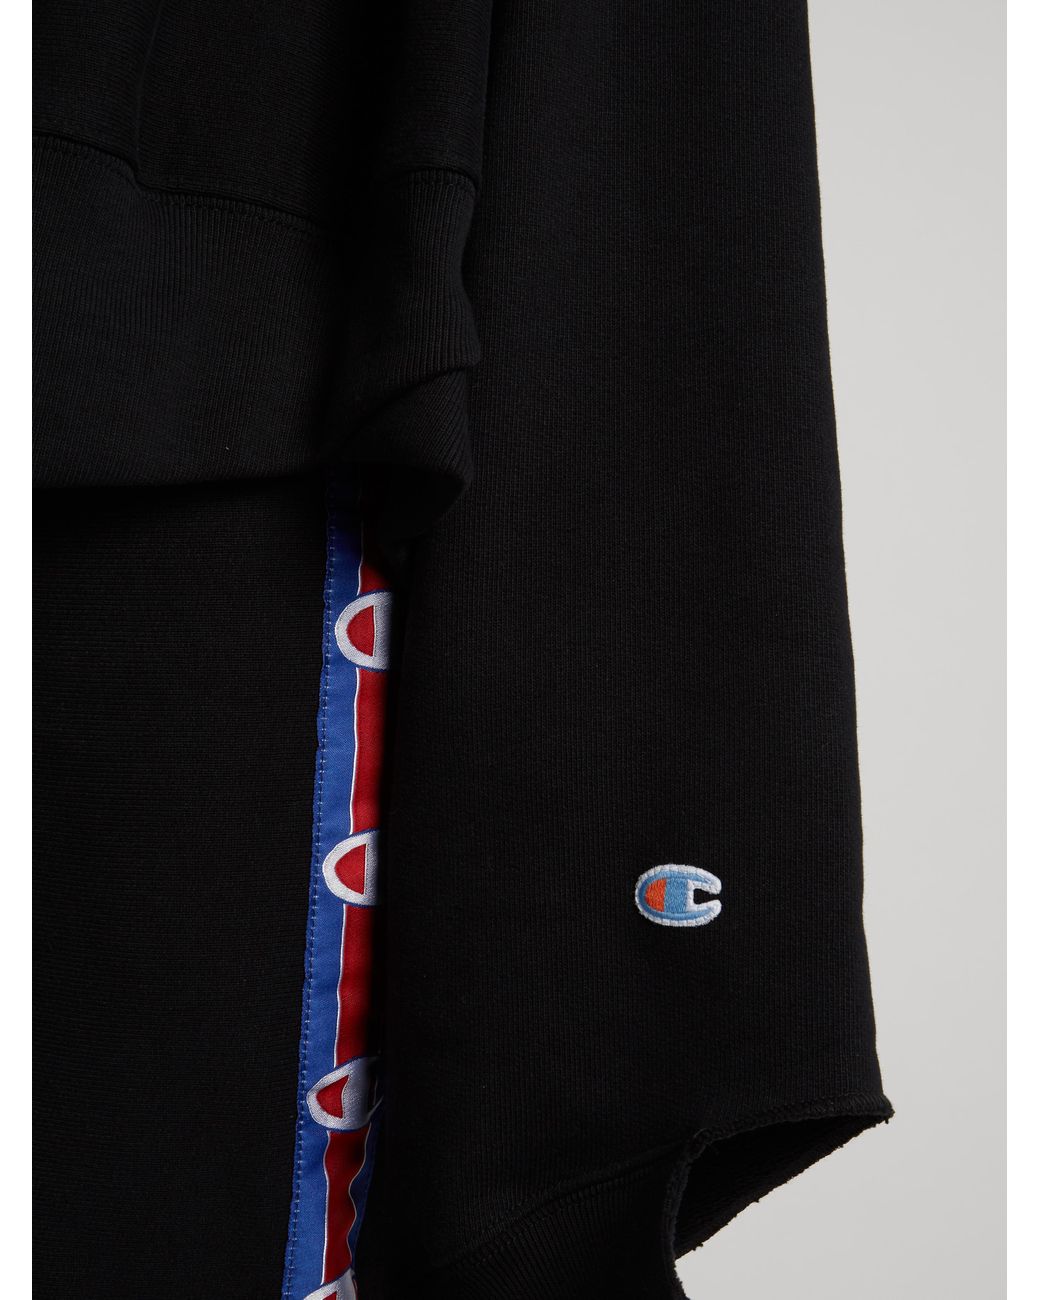 Vetements X Champion Oversized Cotton-blend Sweatshirt in Black | Lyst